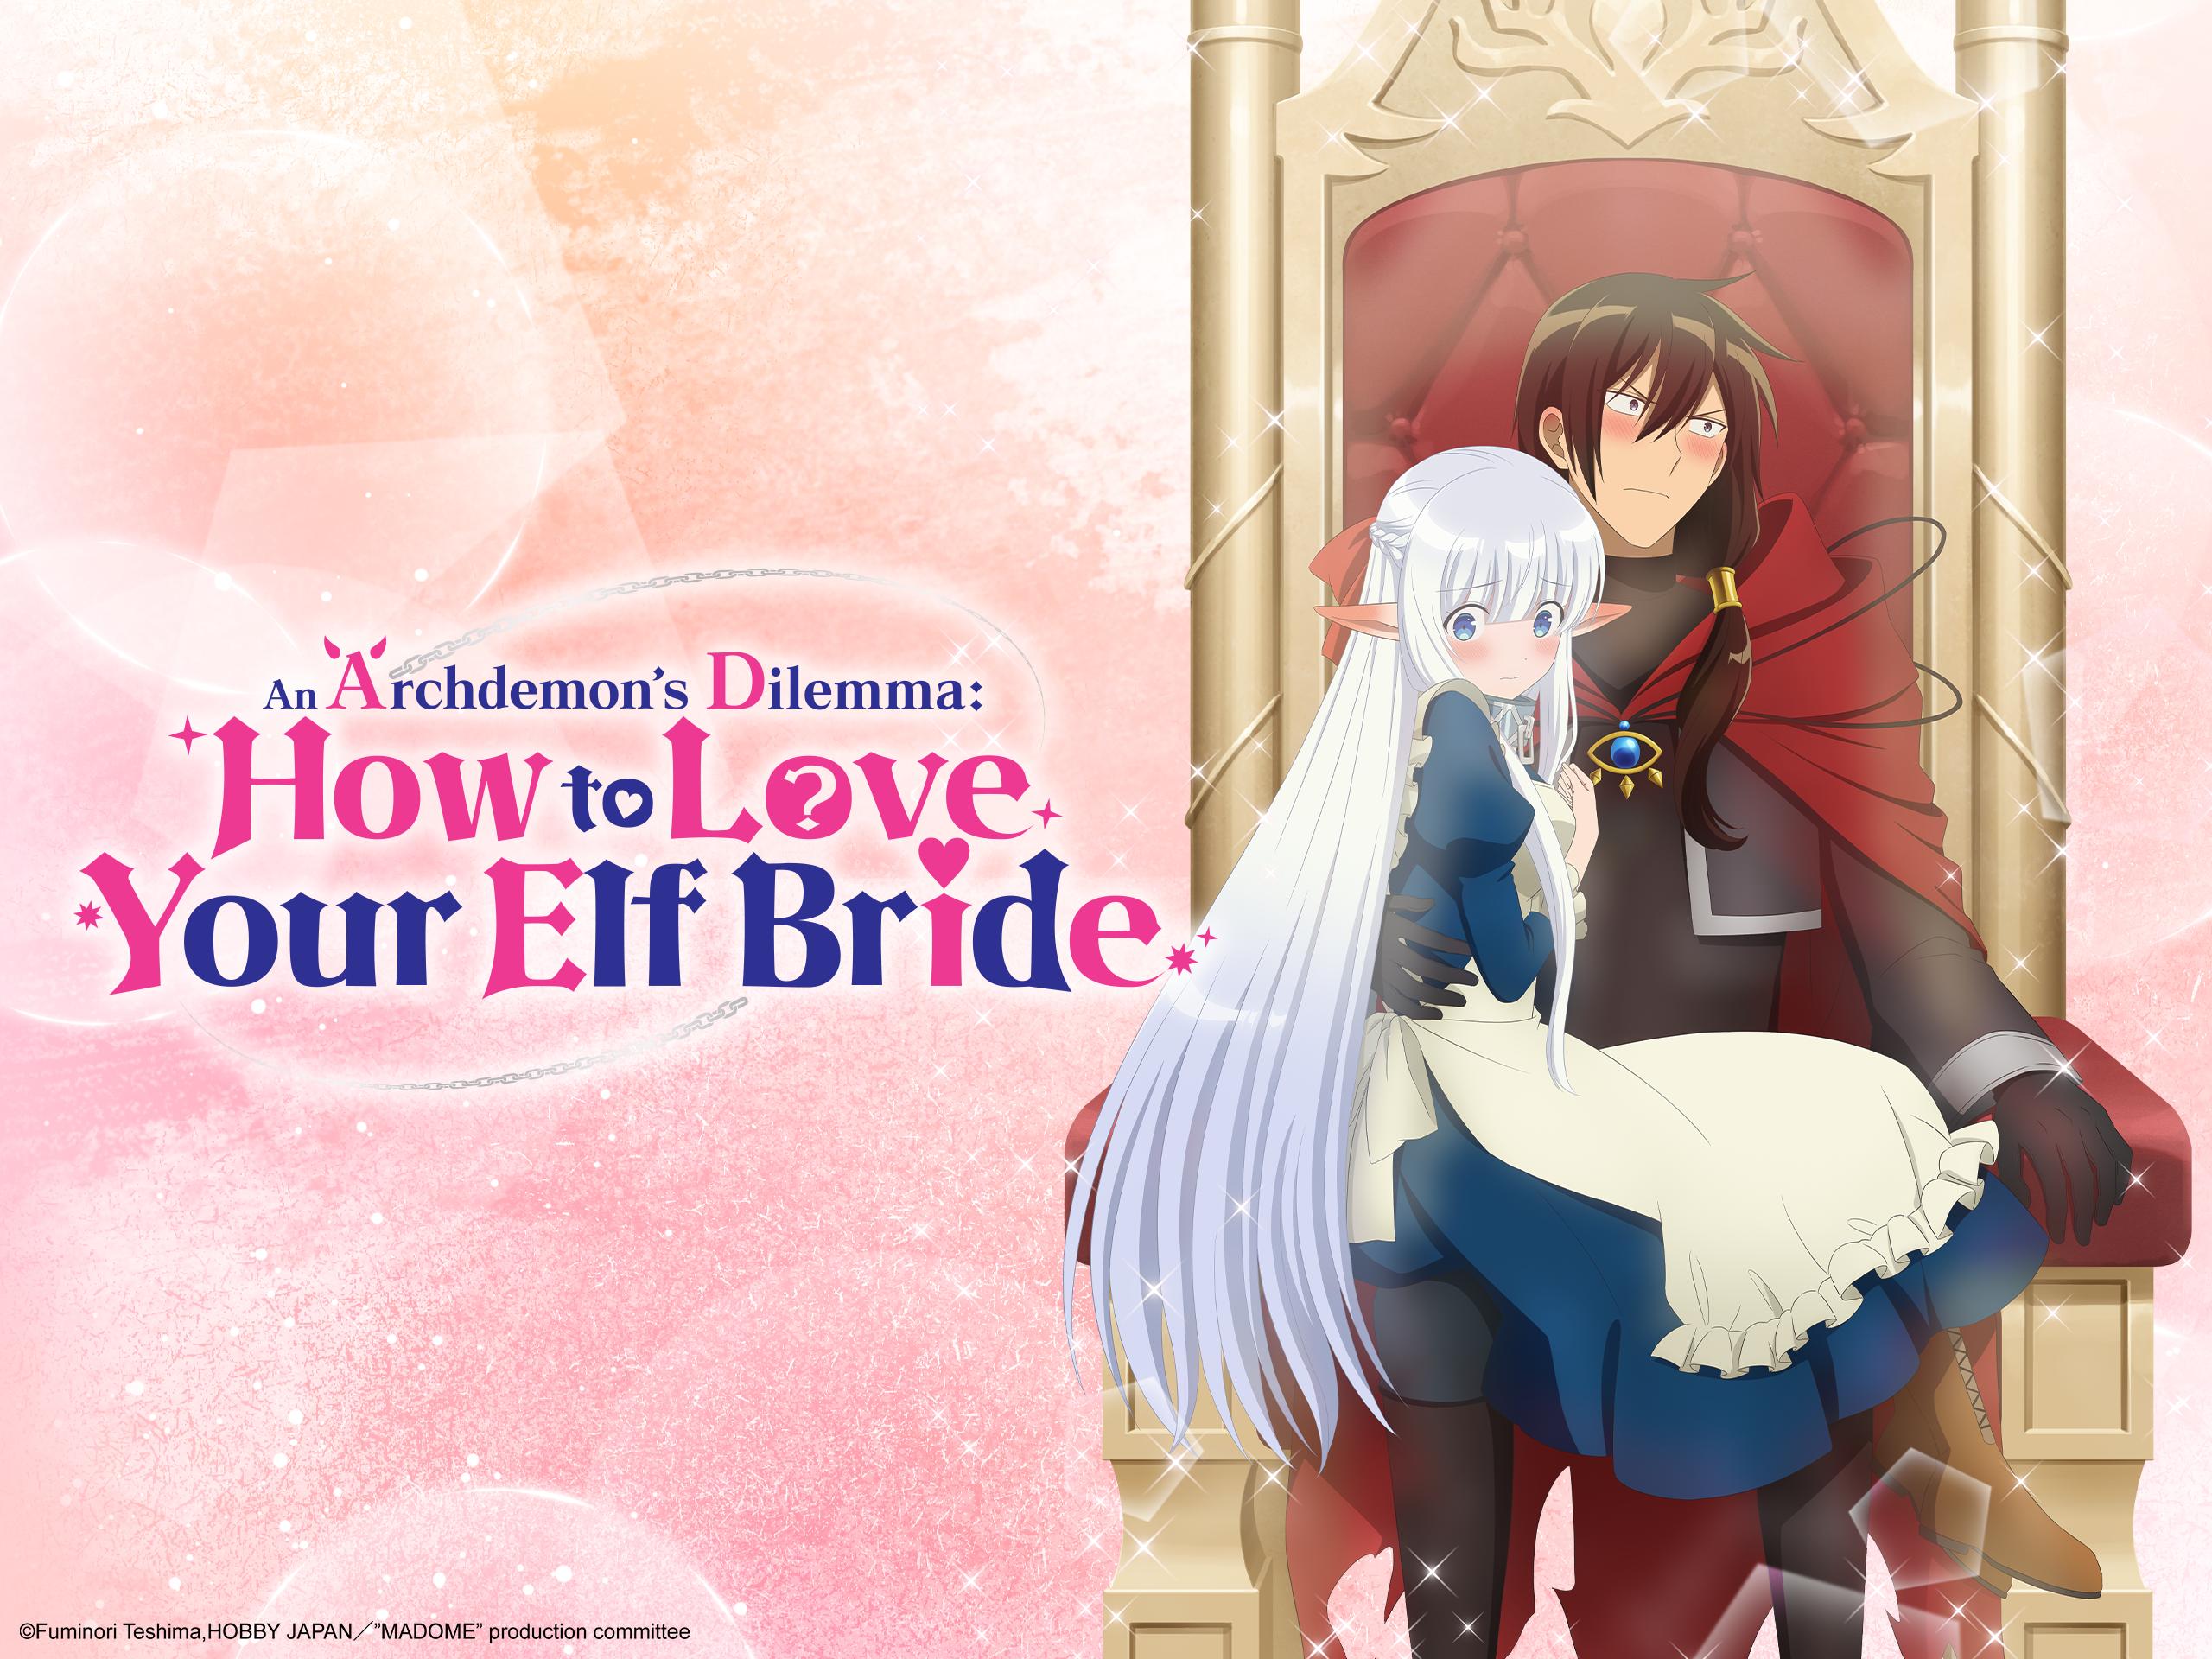 An Archdemon’s Dilemma: How to Love Your Elf Bride: Saison 1 Episode 6